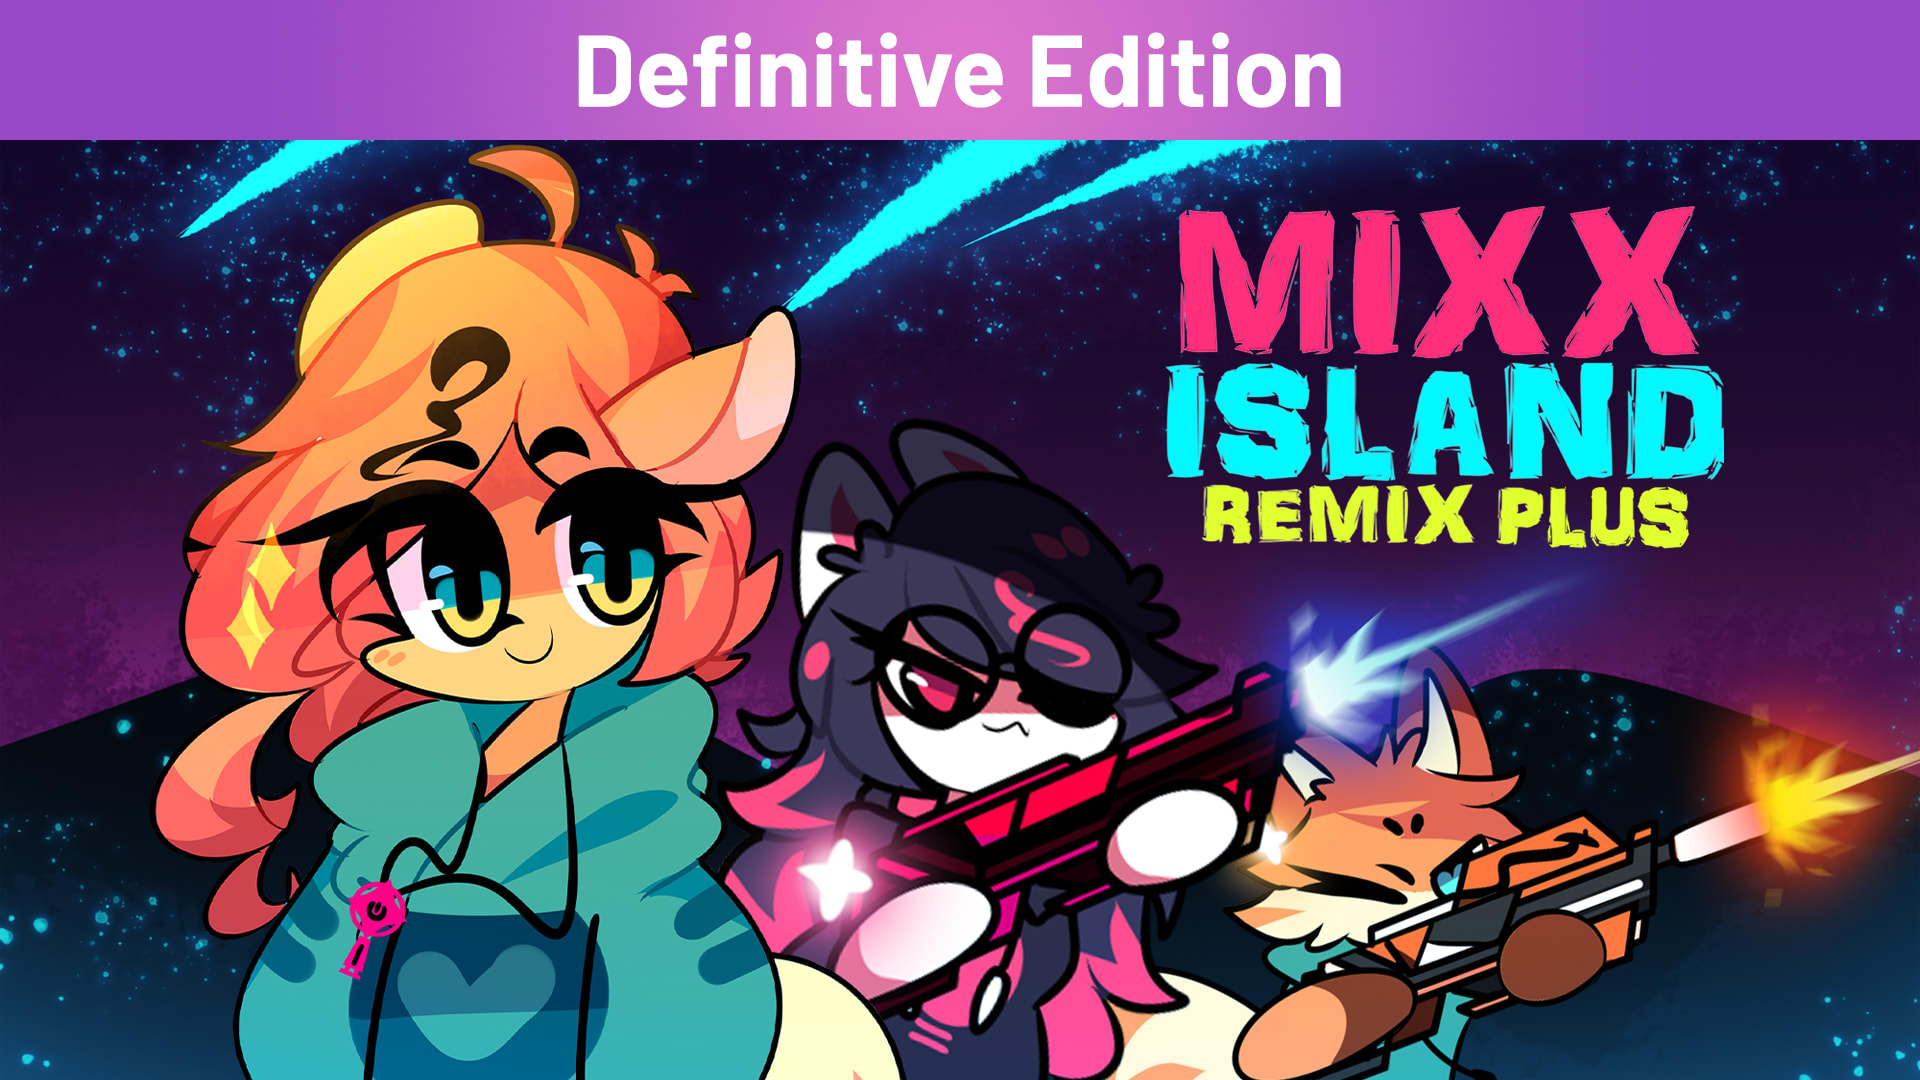 Mixx Island: Remix Plus Definitive Edition